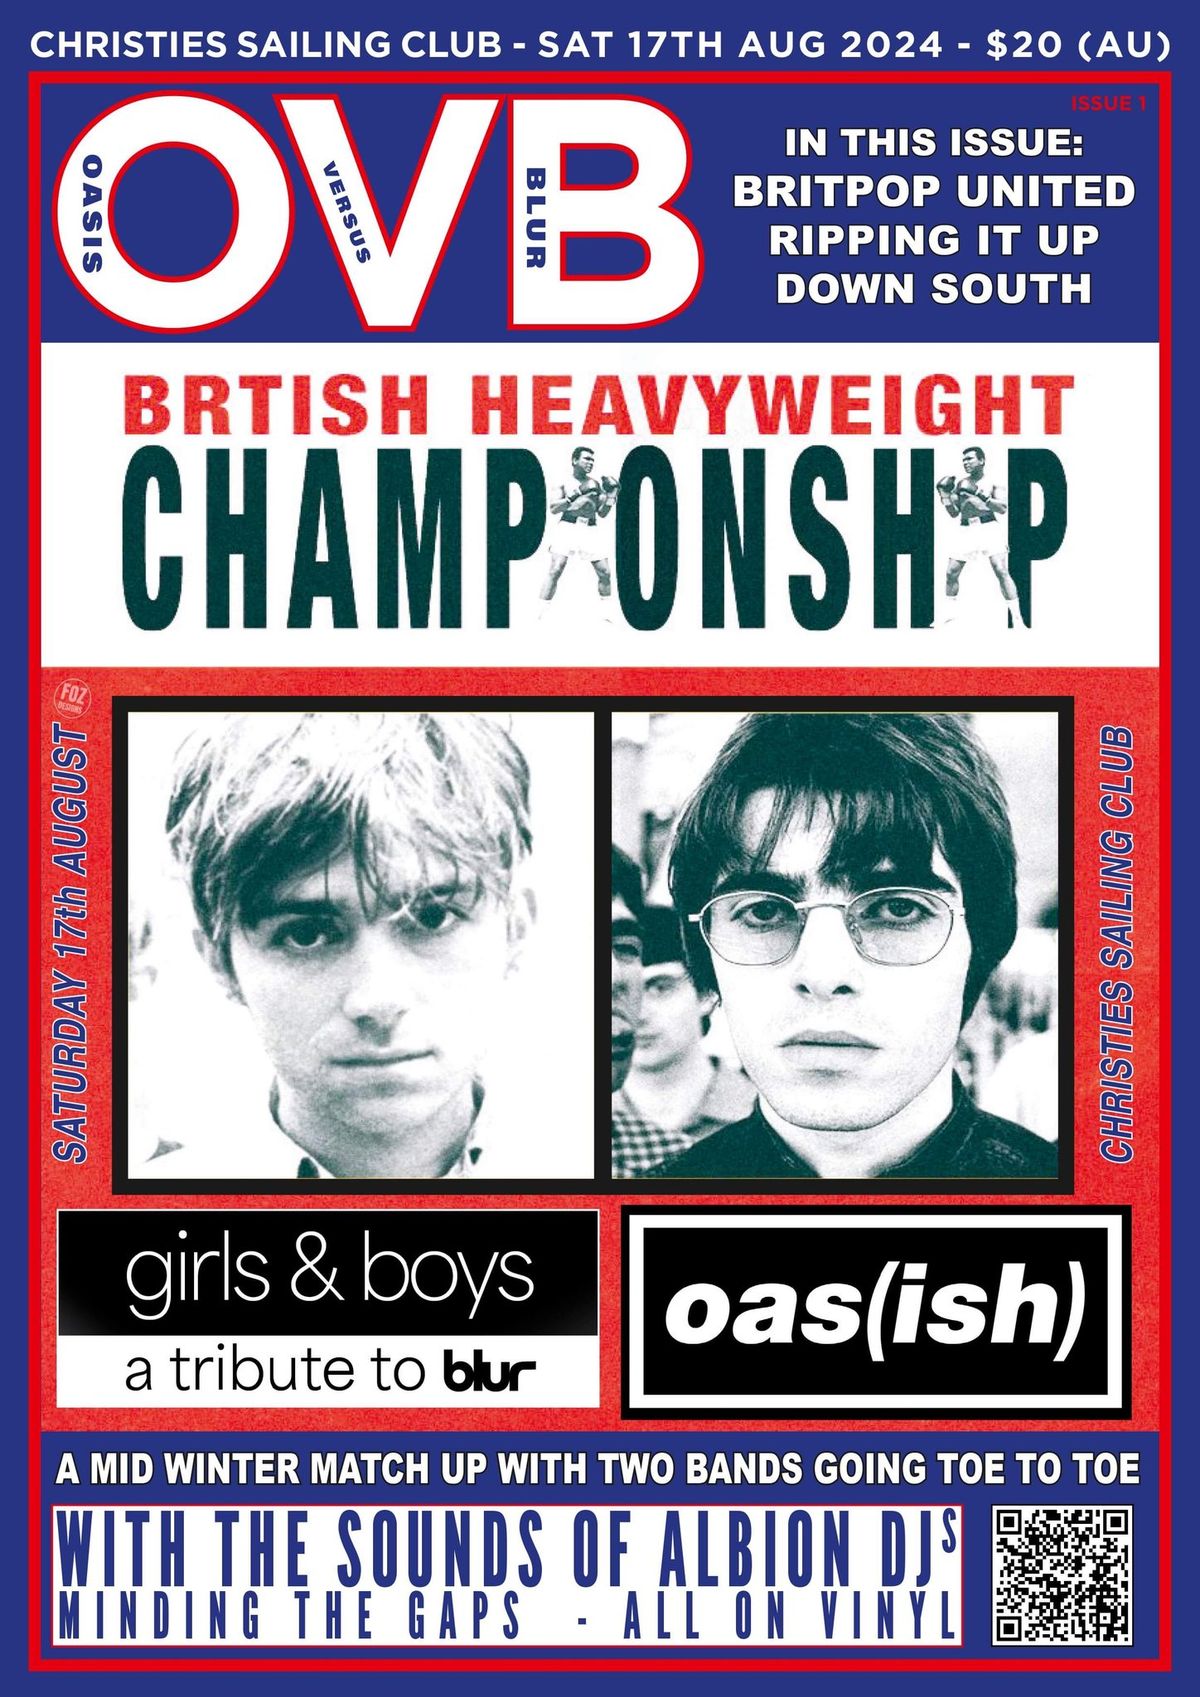 Britpop United down south - Oasis vs Blur